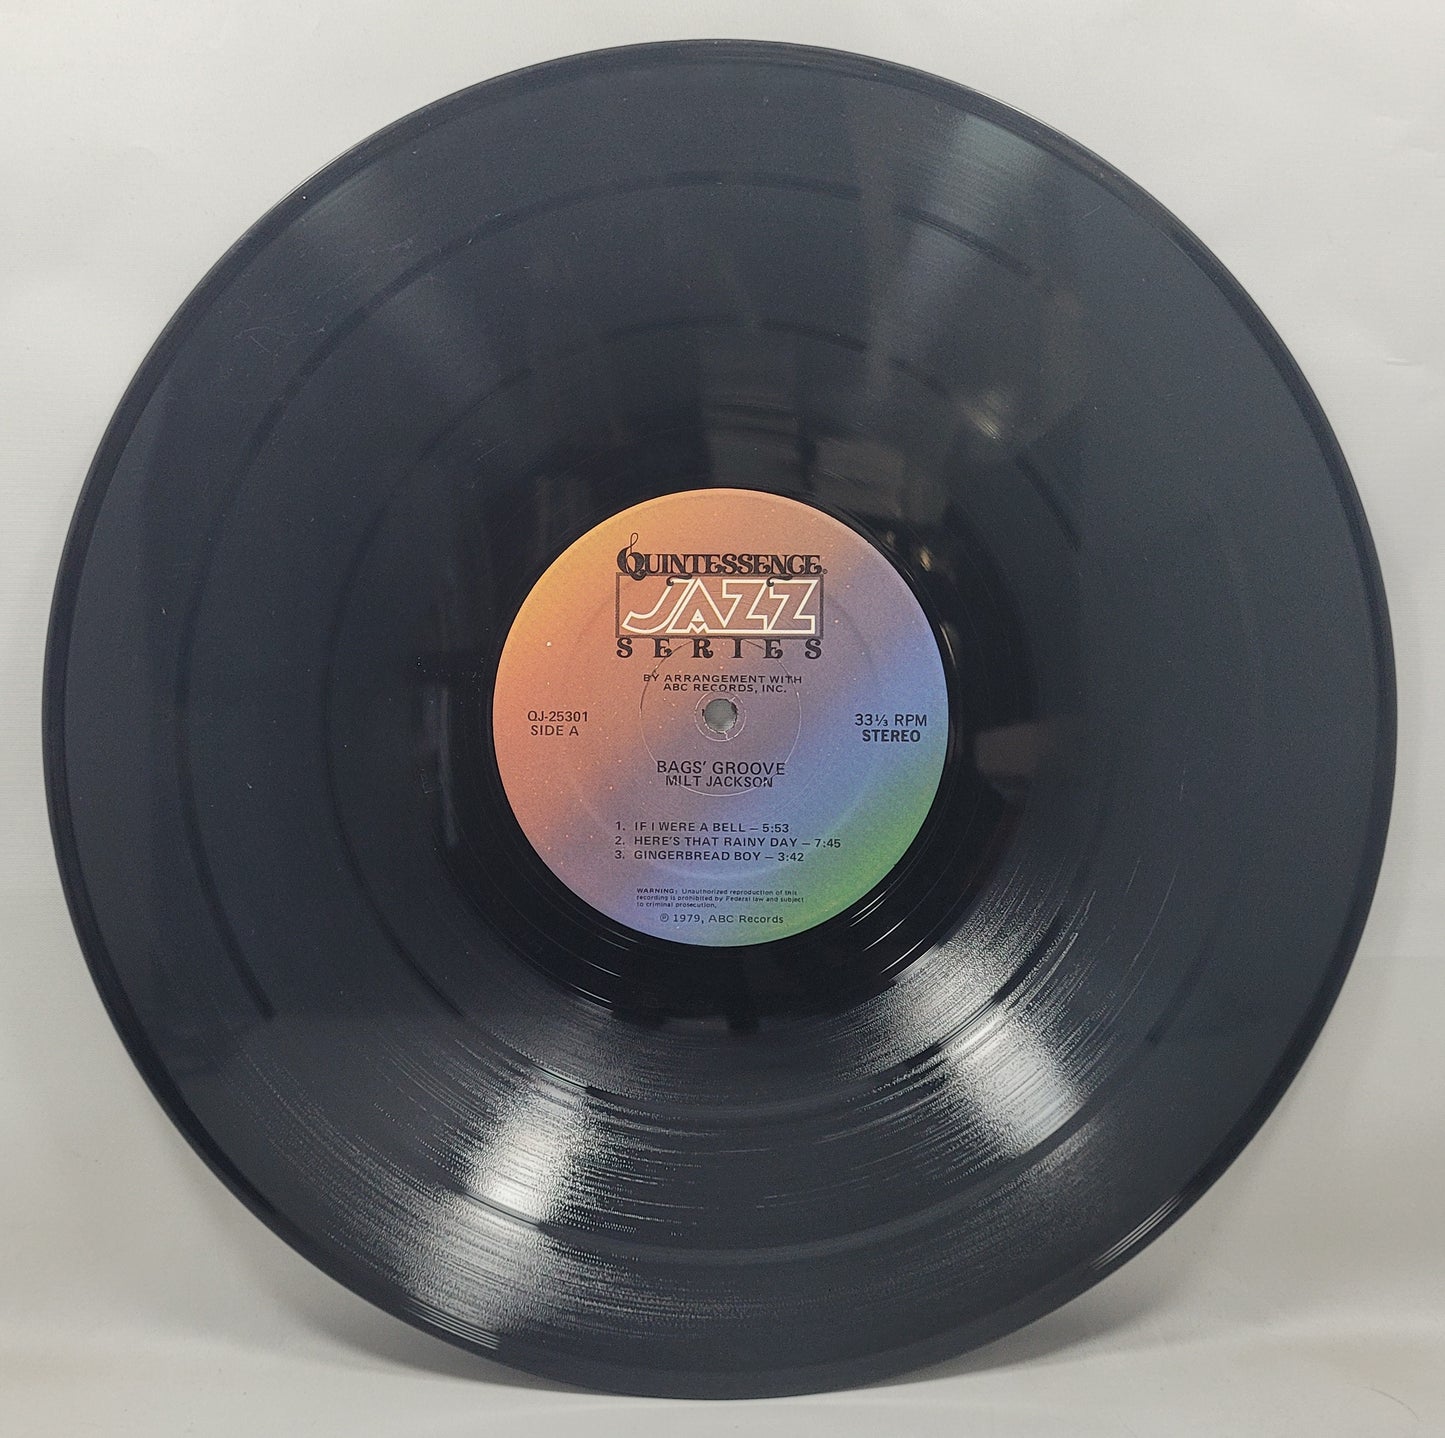 Milt Jackson - Bags' Groove [1979 Compilation] [Used Vinyl Record LP]